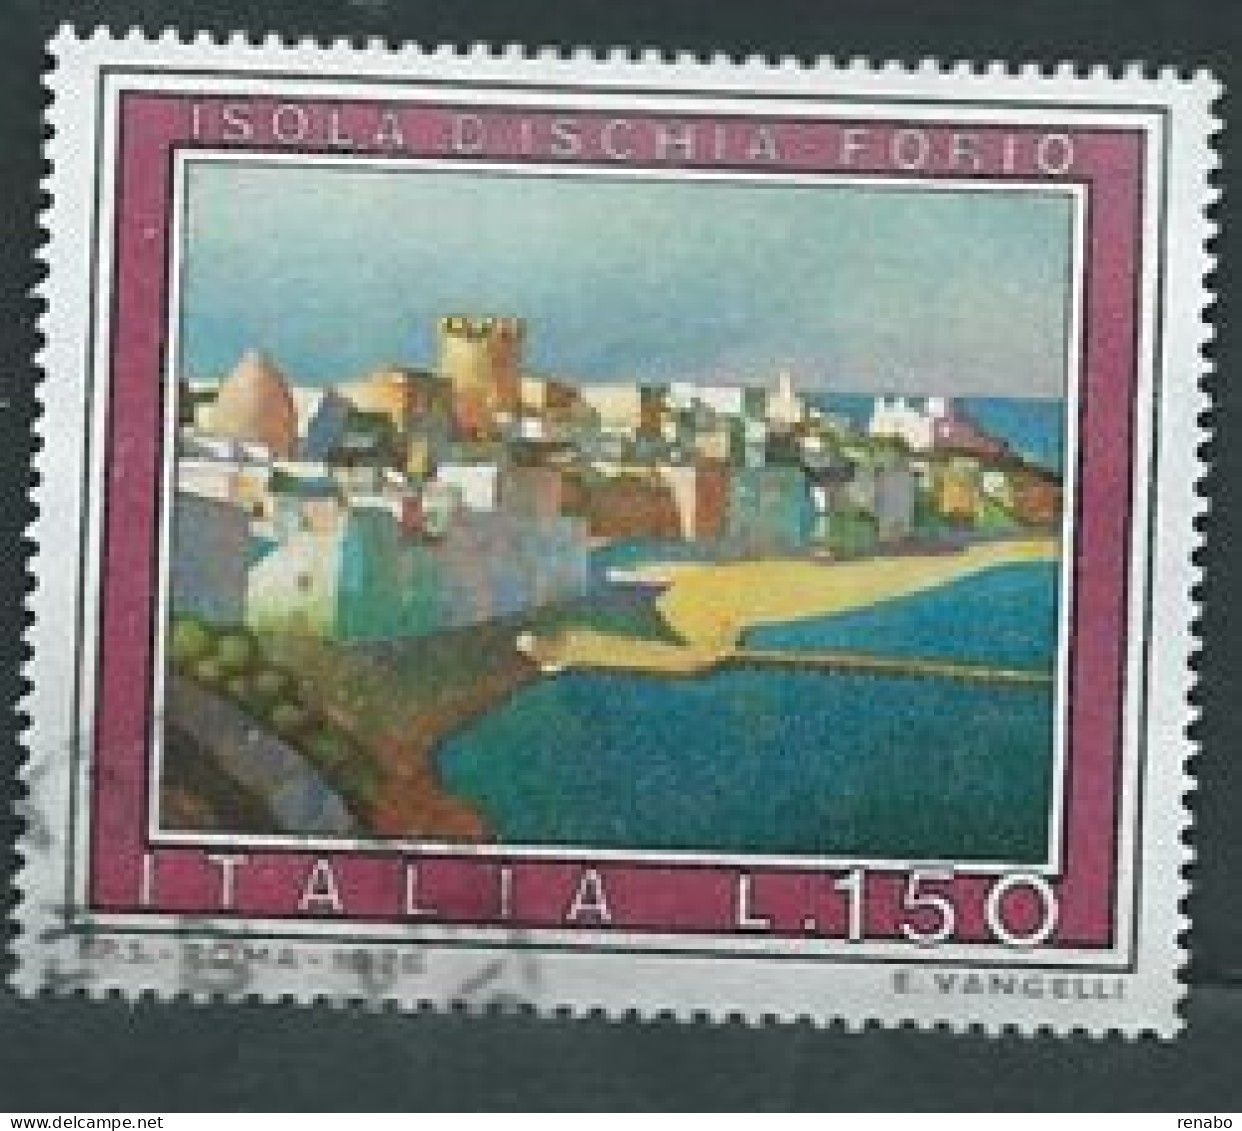 Italia, Italy, Italien, Italie 1976; Ischia, Isola Rinomata Per Le Cure Termali, Spa Treatments . Used. - Bäderwesen